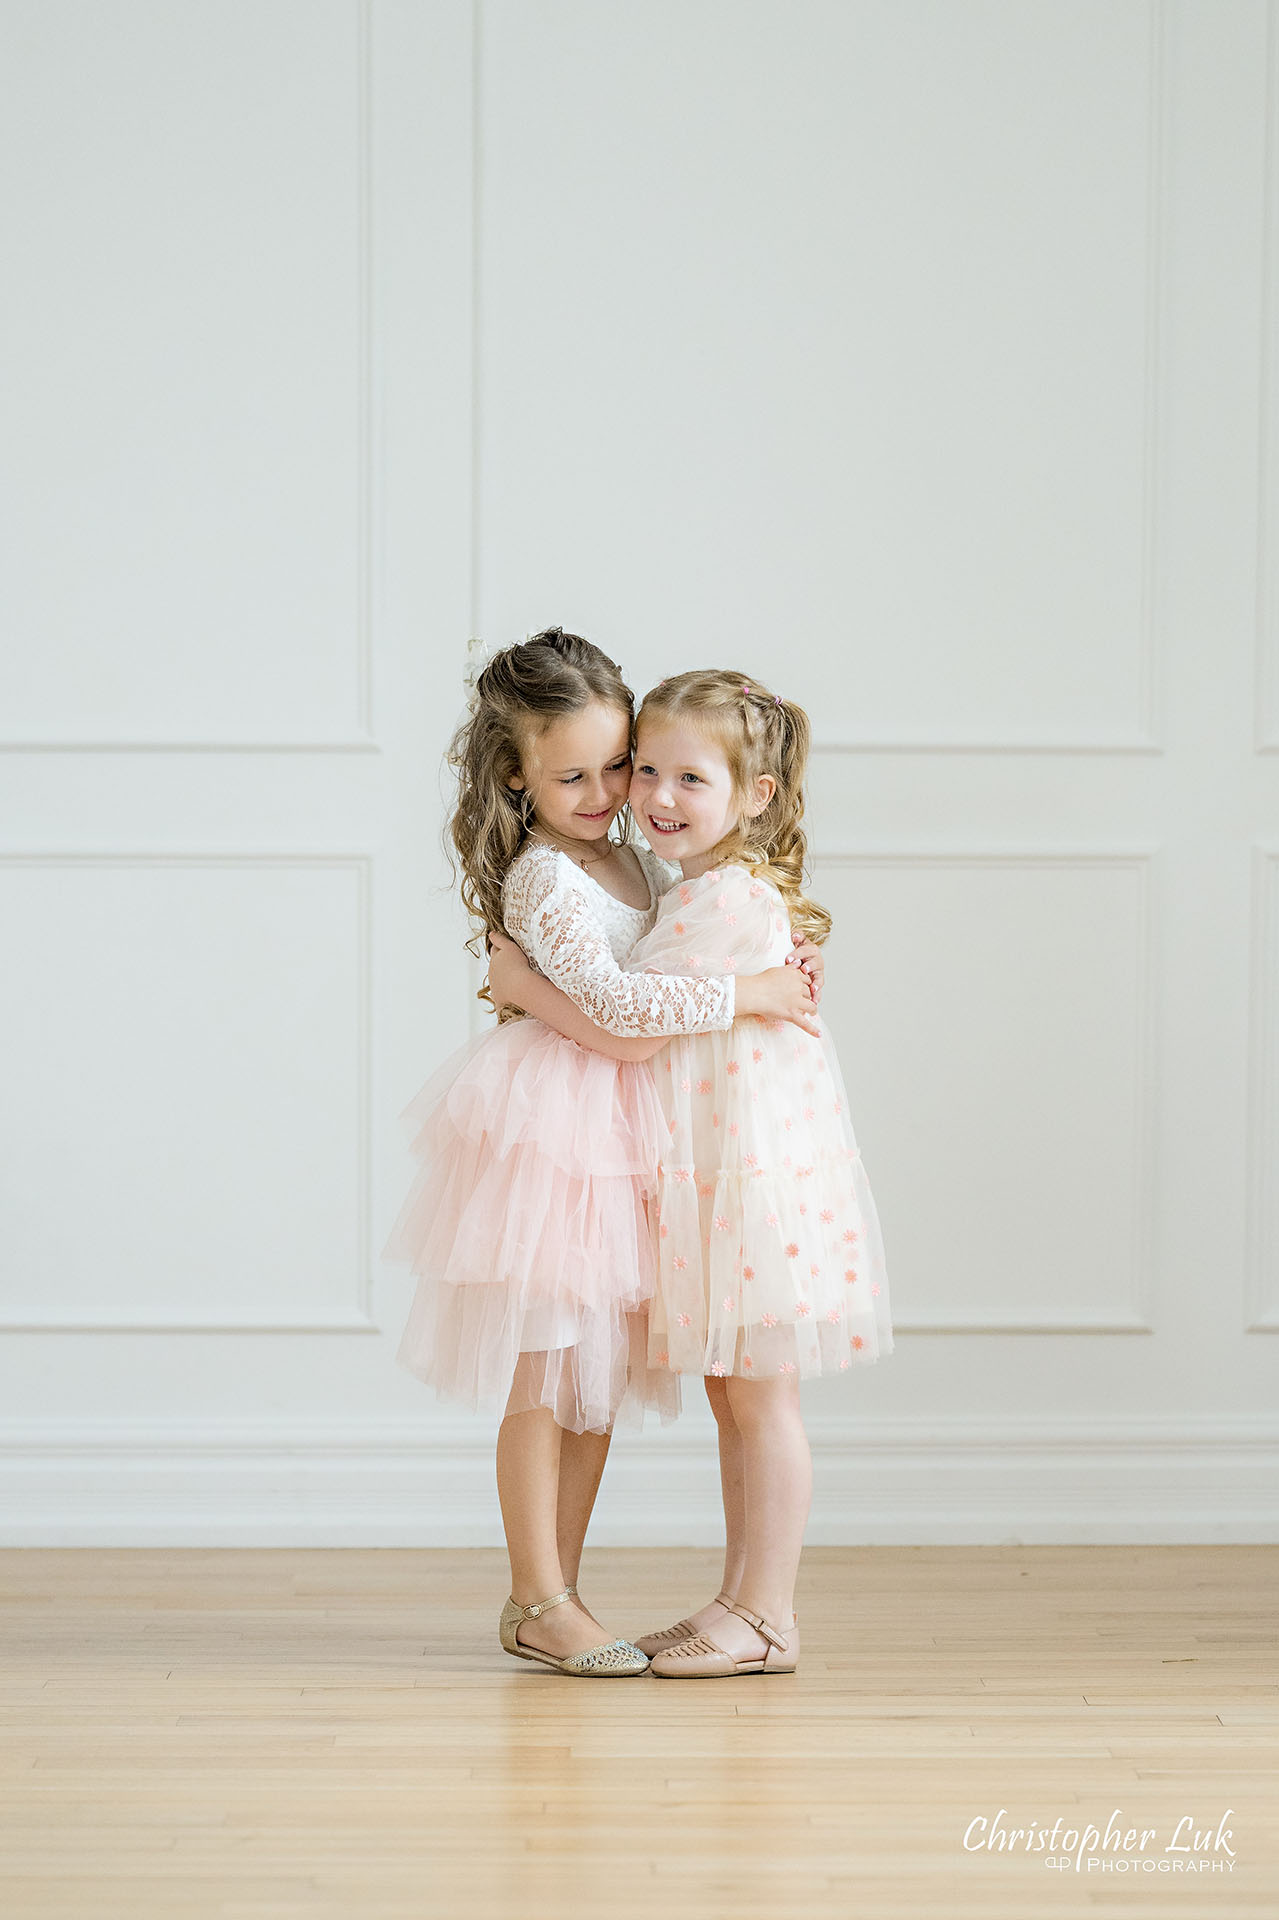 Cousins Sisters Daughters Girls White Pink Dresses Hug Hugging Cute Adorable Sweet Portrait